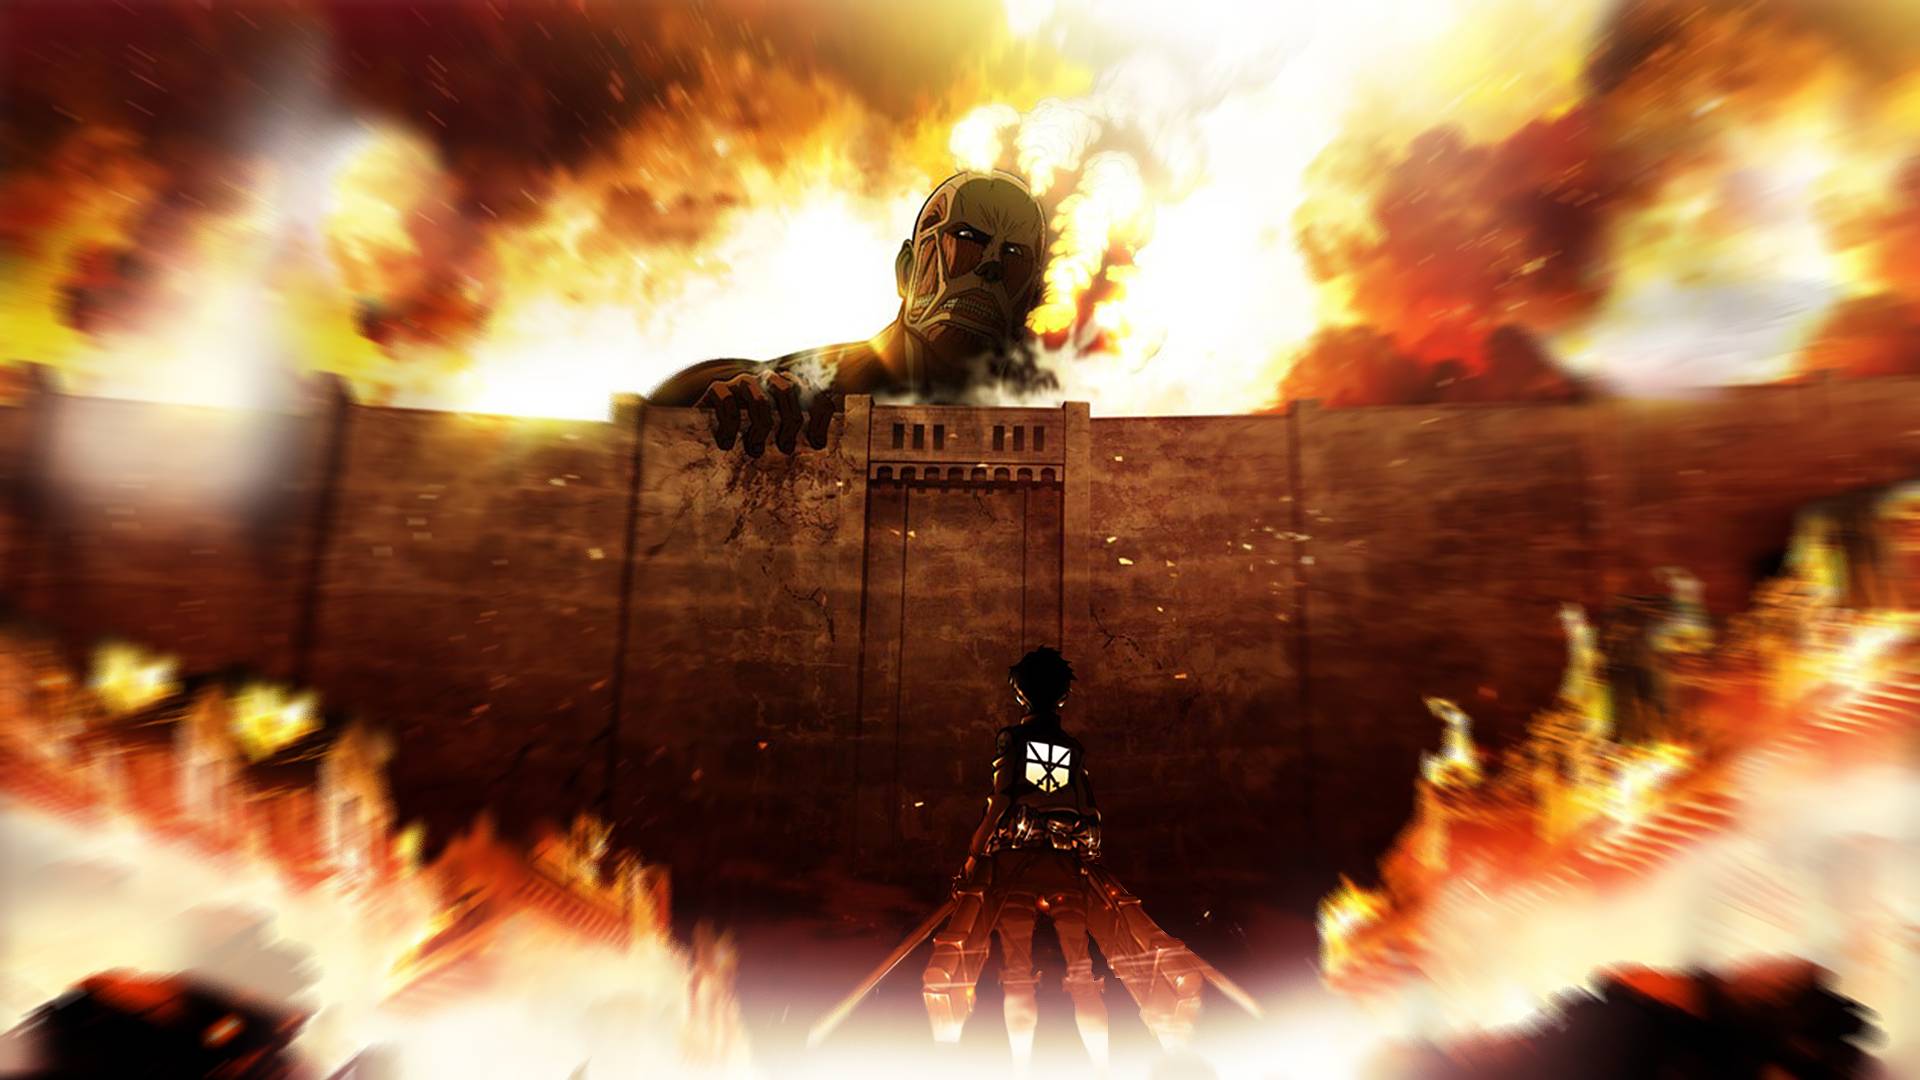 Attack On Titan Desktop Background. Attack On Titan Wallpaper Anime, Attack On Titan Wallpaper and Attack On Titan Chibi Wallpaper